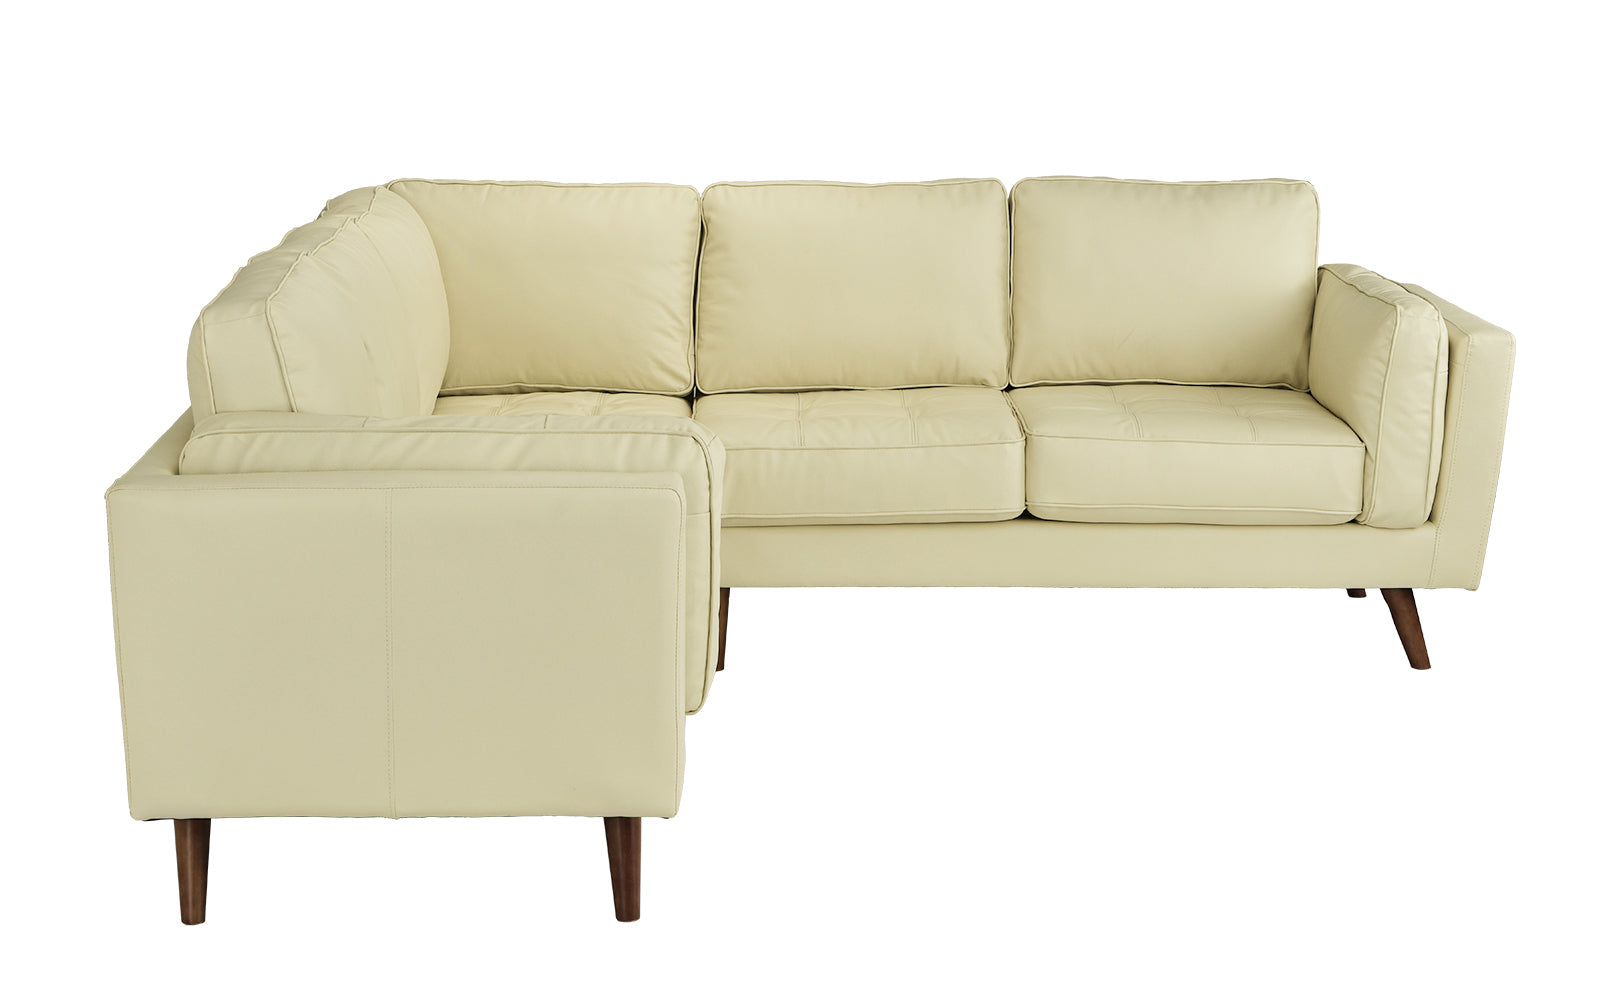 mateo modern mid century leather sofa